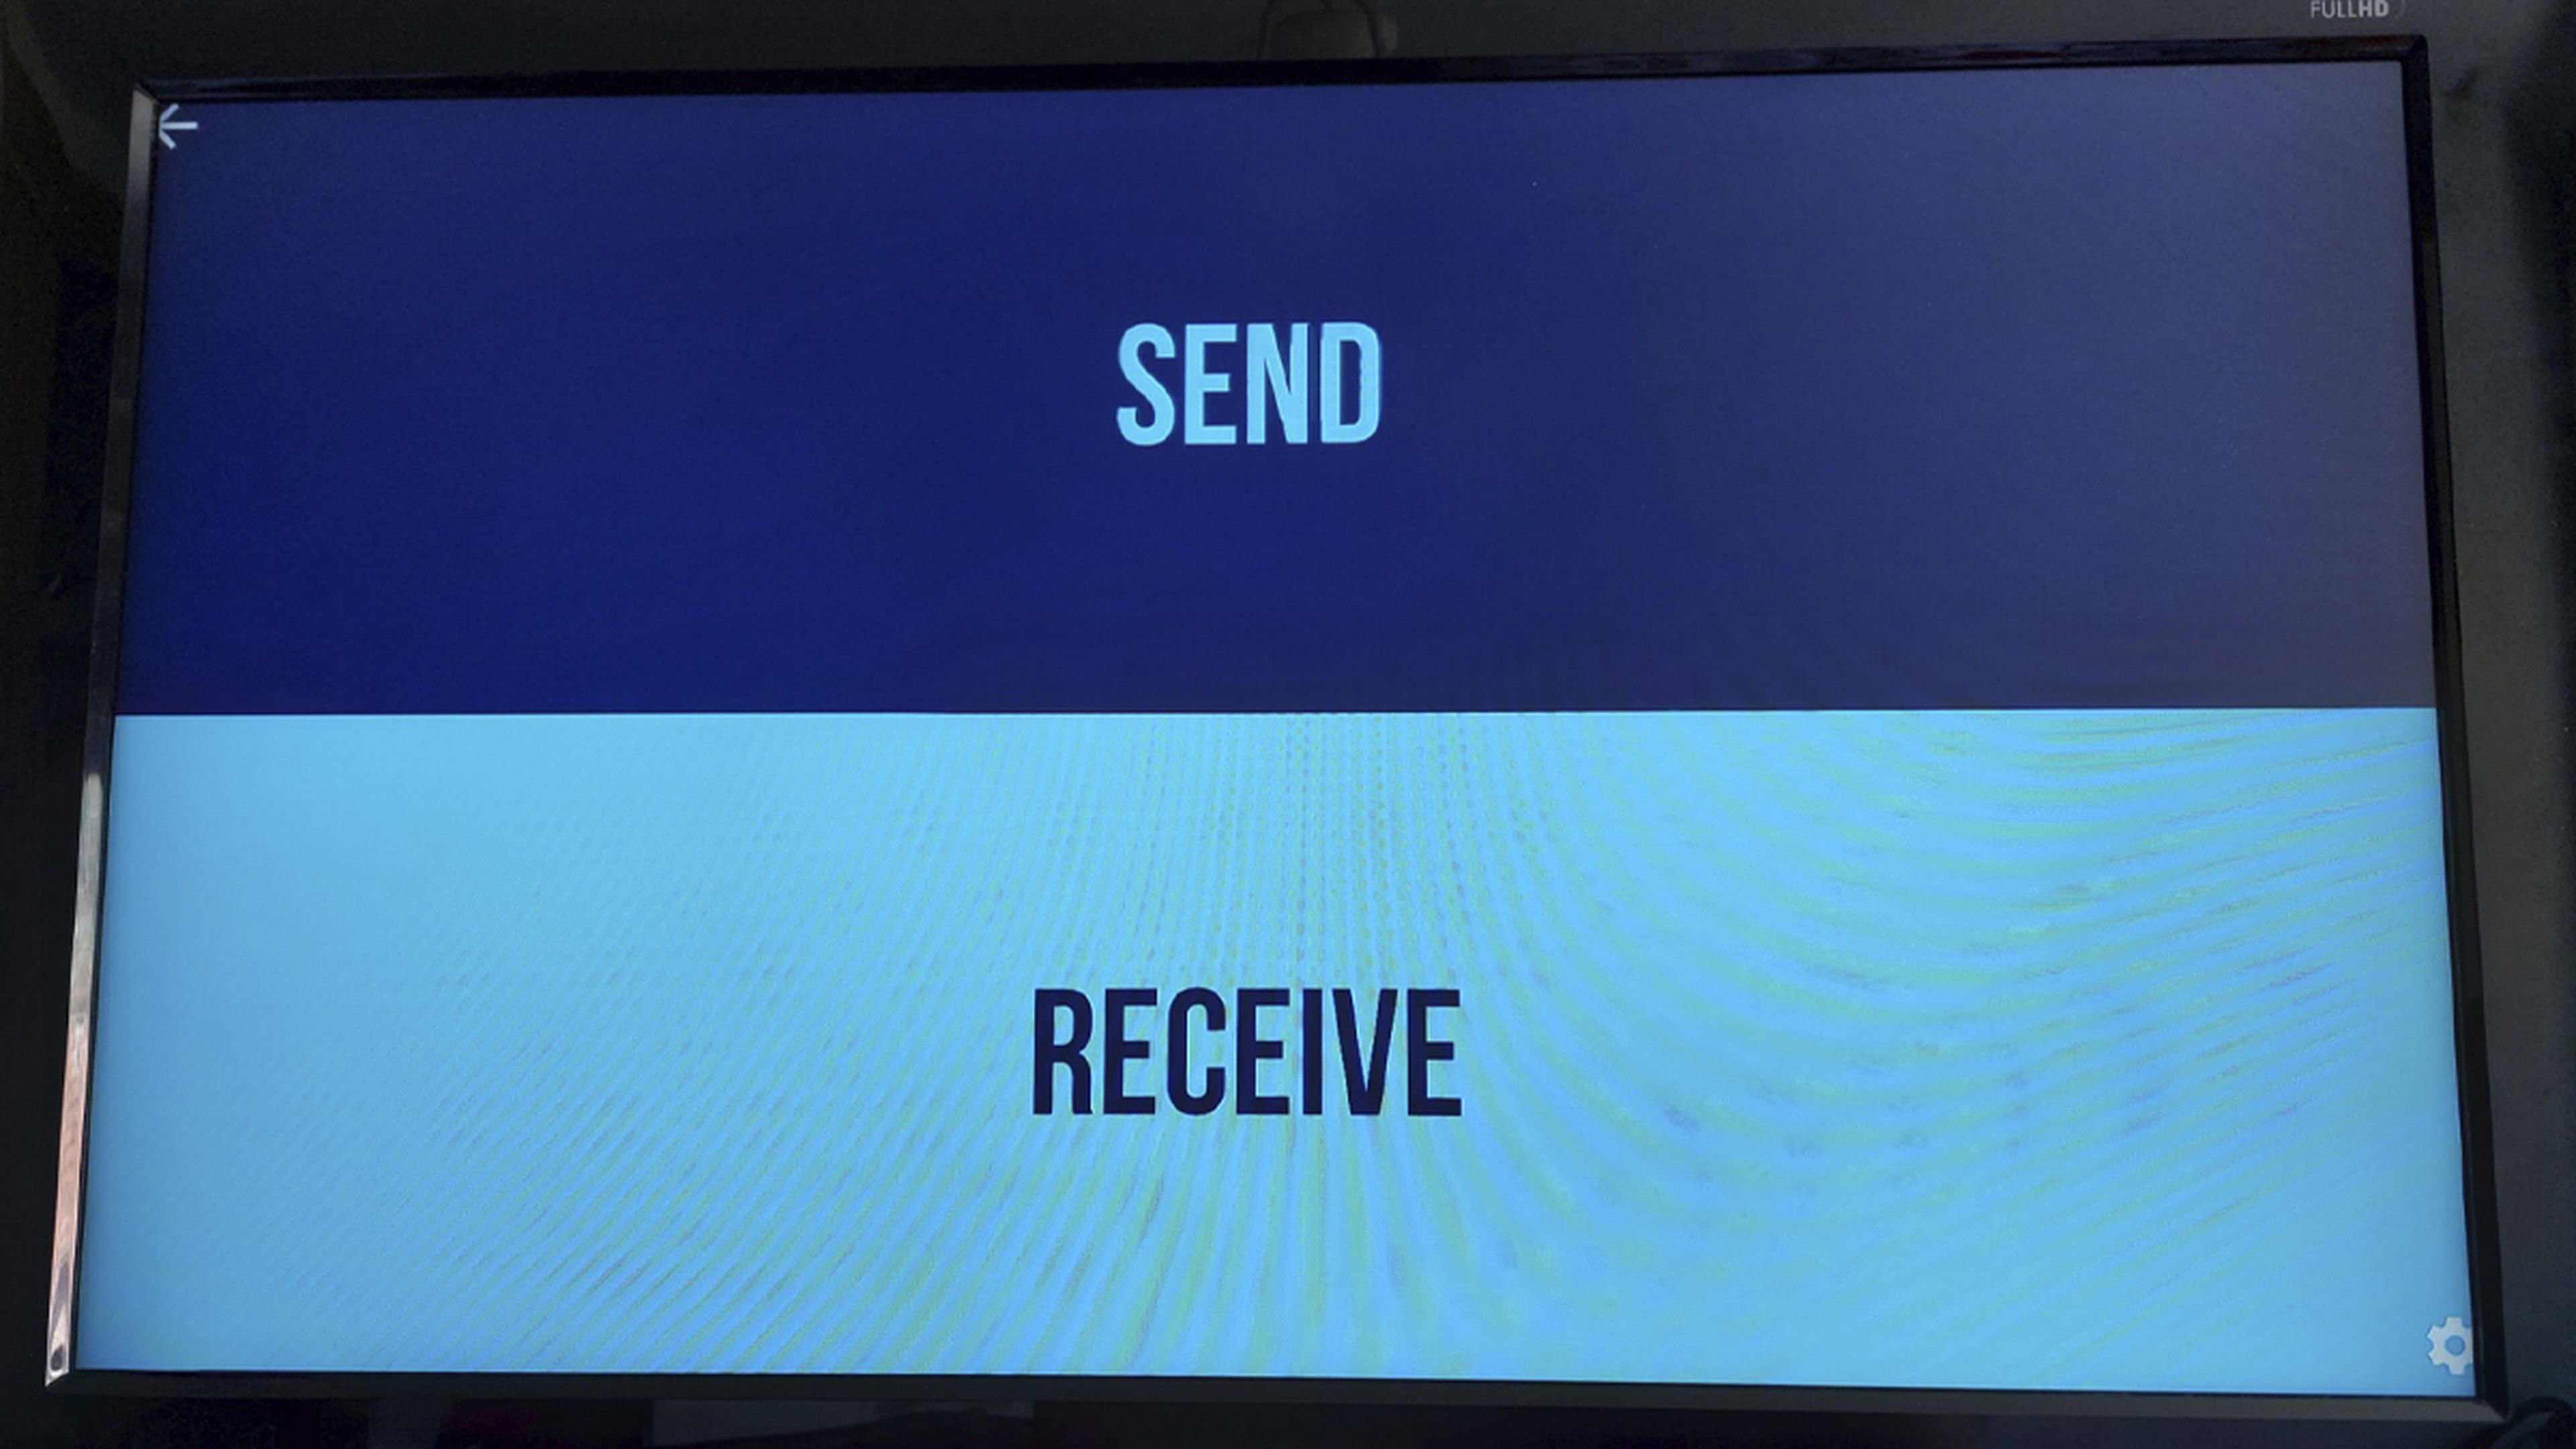 Send Files to TV